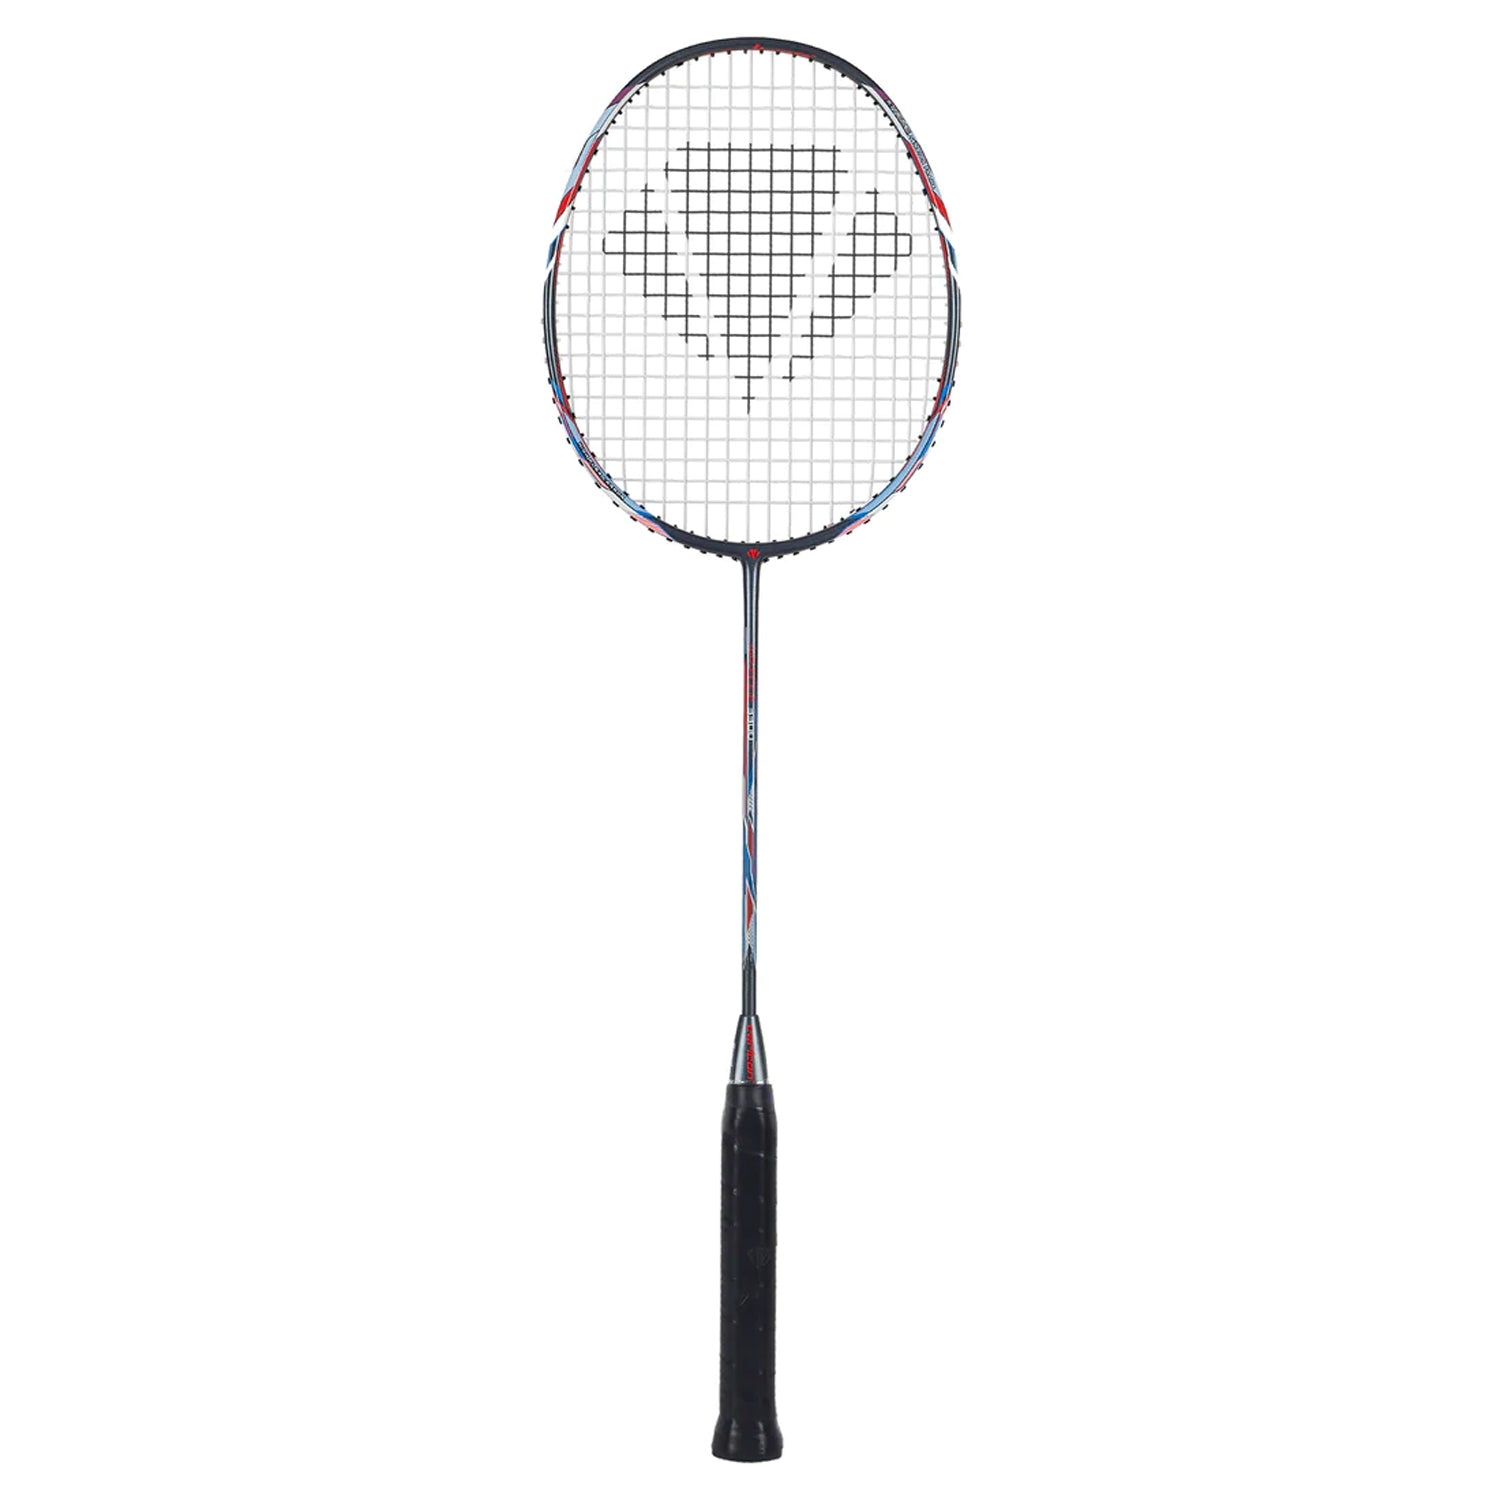 Carlton AIR Edge 3300 Strung Badminton Racquet, G6- Black/Red - Best Price online Prokicksports.com